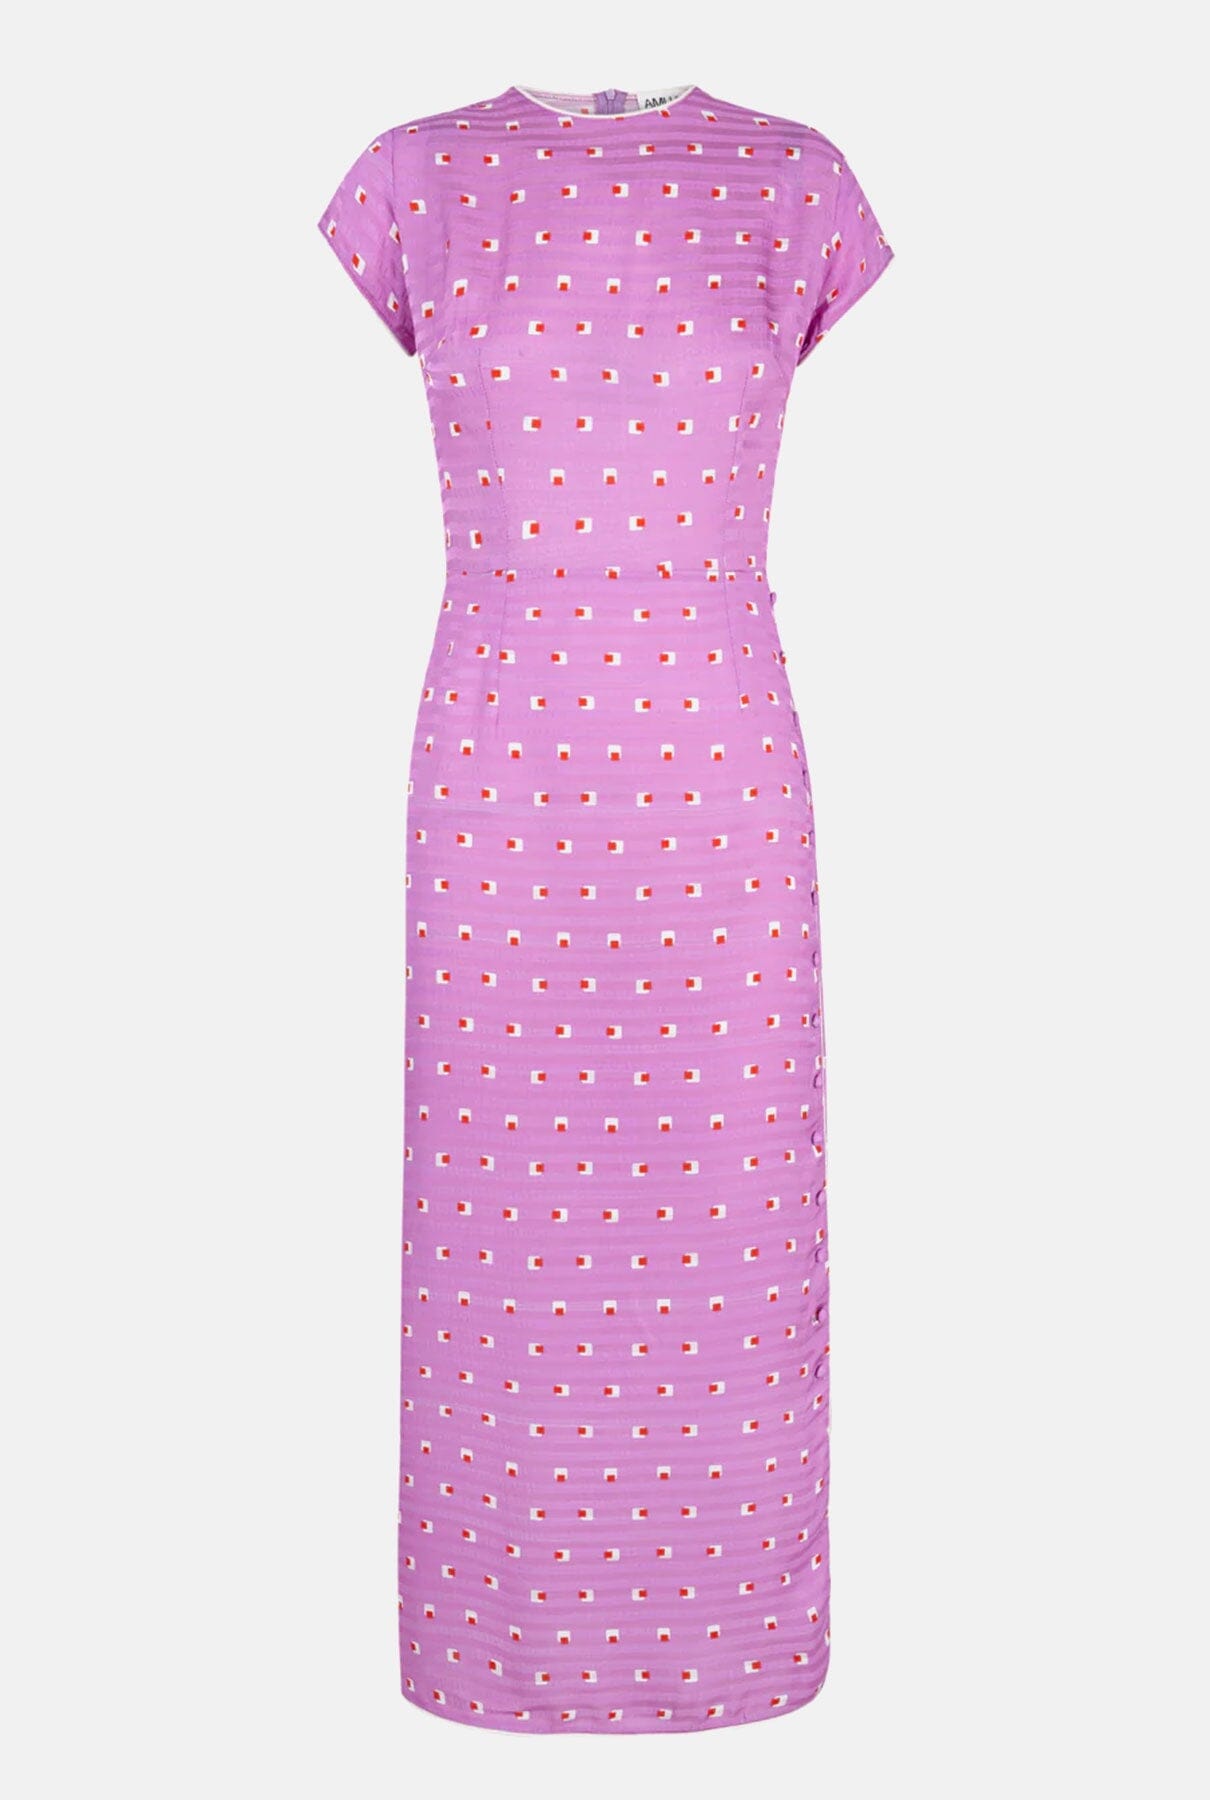 The Southampton Pink Dress Dresses Amlul 